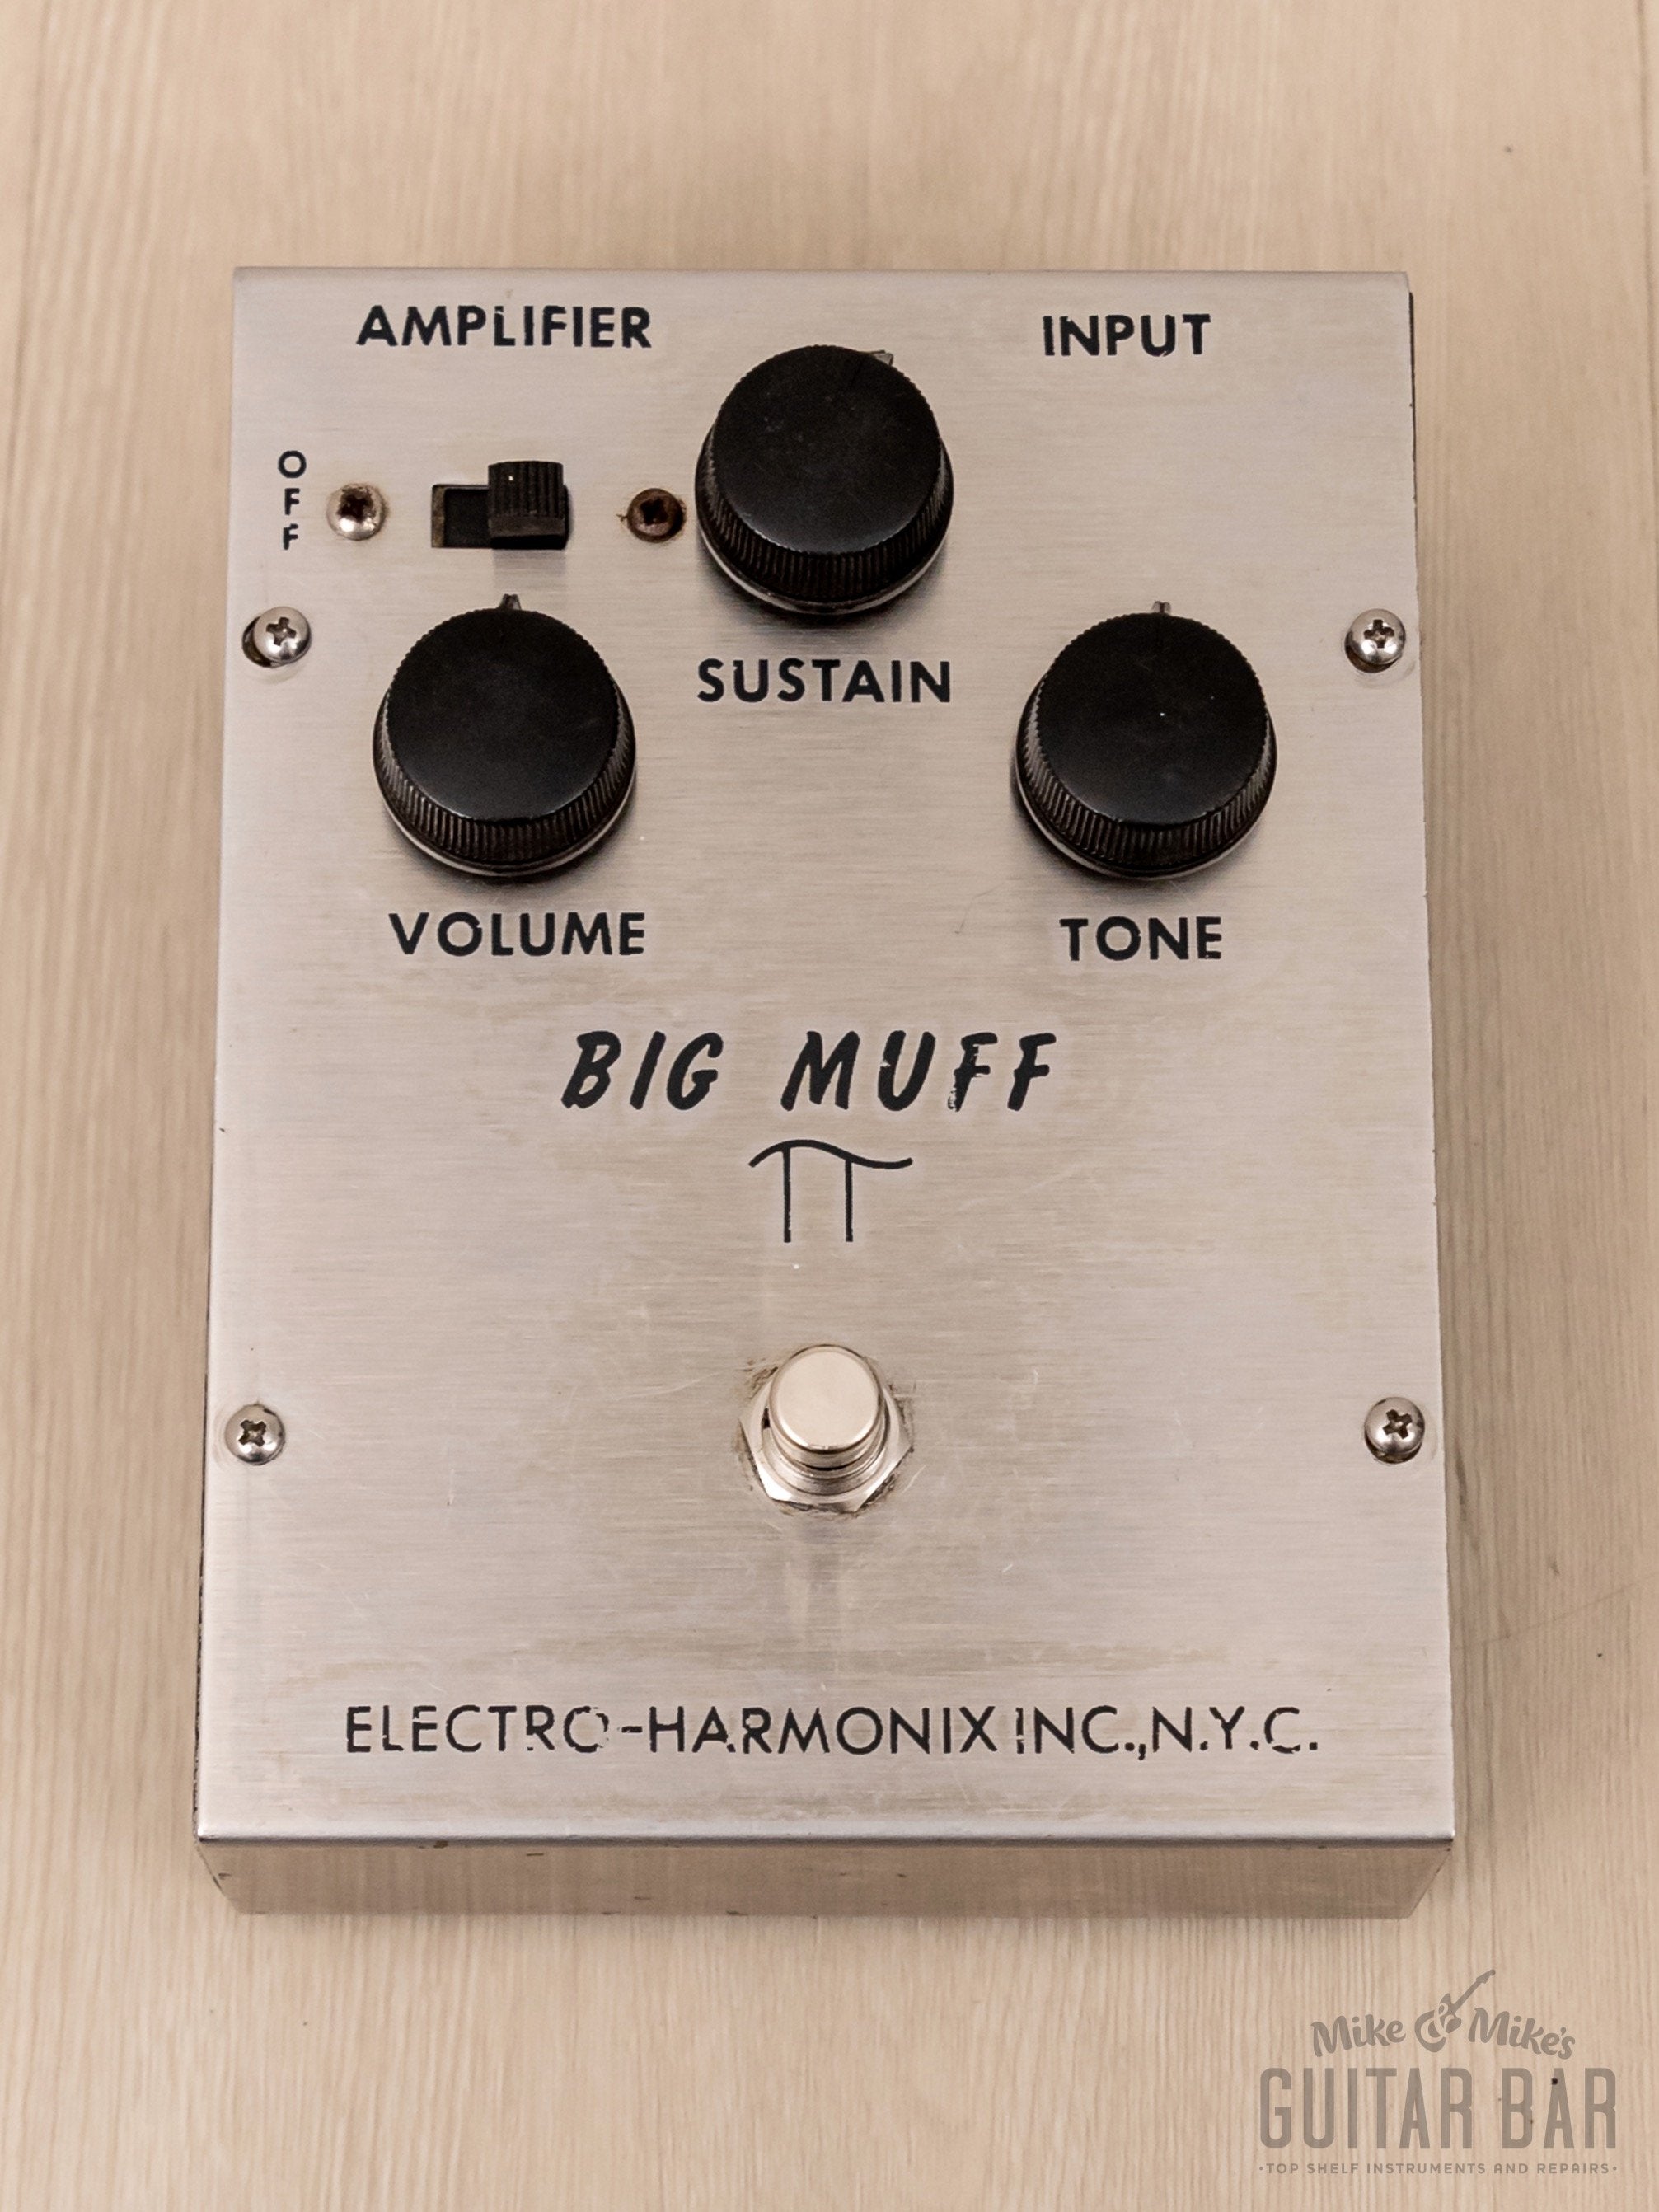 1972 Electro Harmonix Big Muff Triangle V1 Vintage Fuzz Guitar Effects Pedal, Fairchild FS37000 Transistors